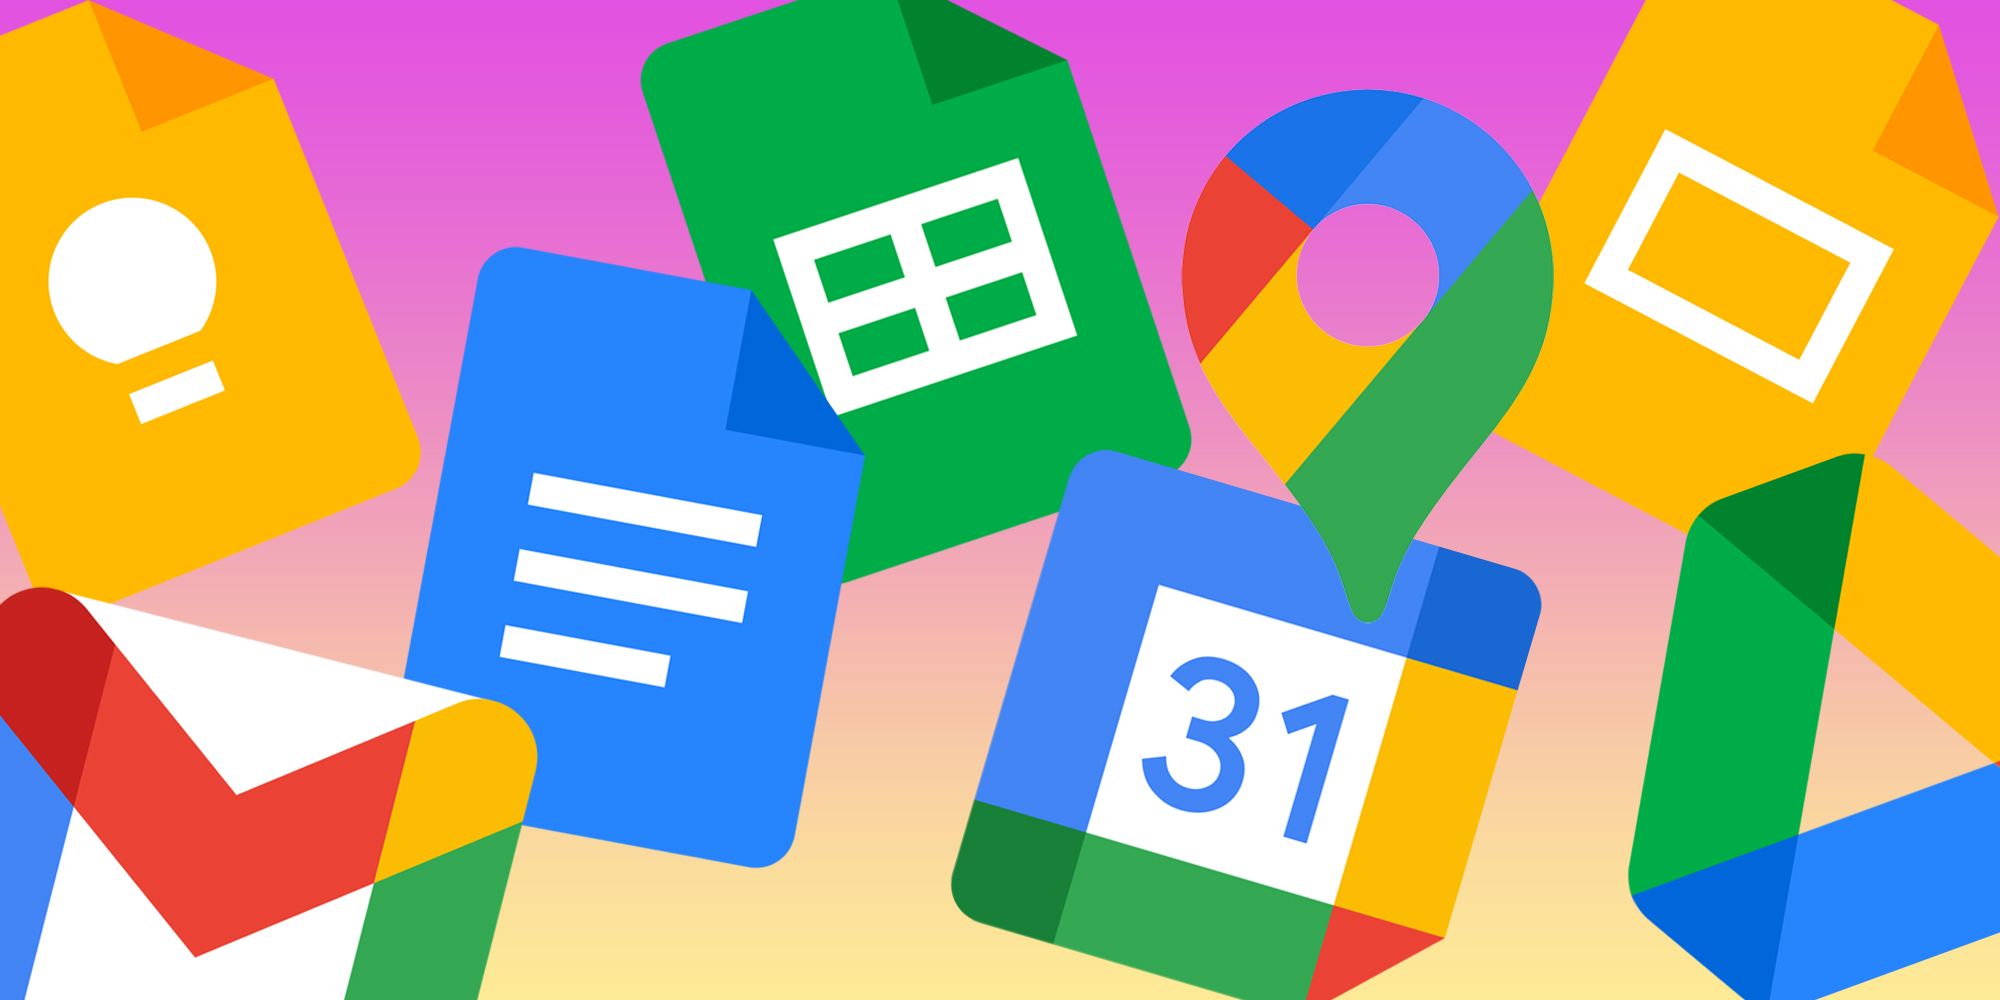 Use el panel lateral en Google Apps para realizar múltiples tareas como un profesional